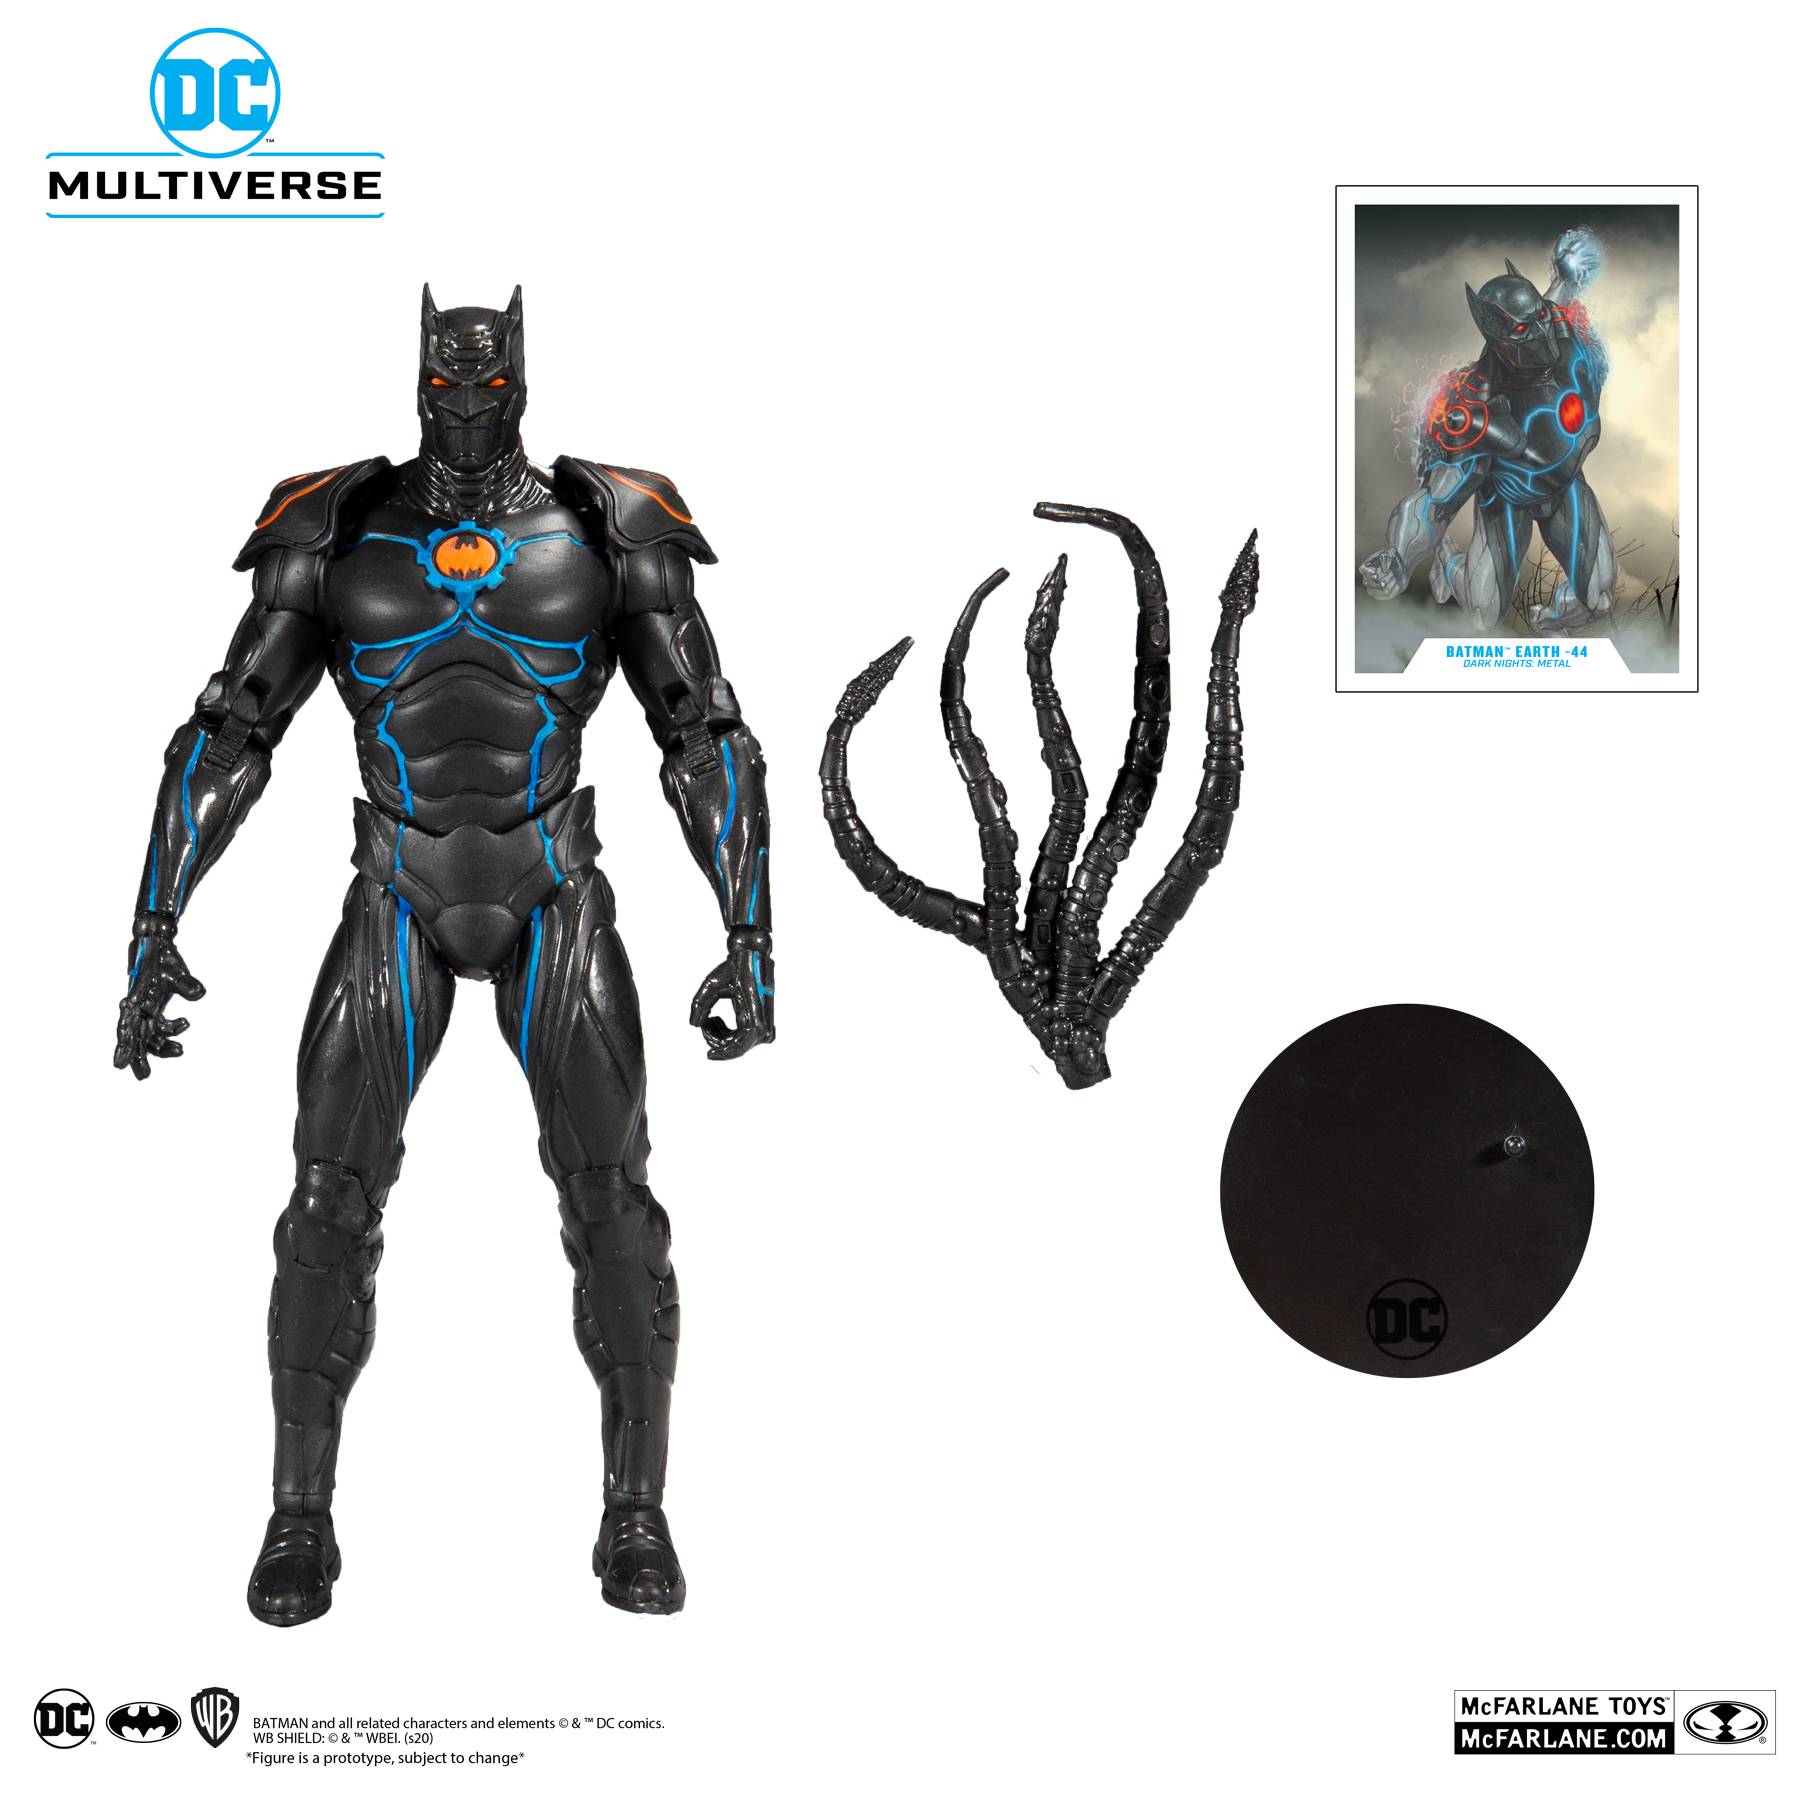 DC Multiverse Batman Earth 44 Figure MISB 2020 McFarlane Toys Brand New In Hand 